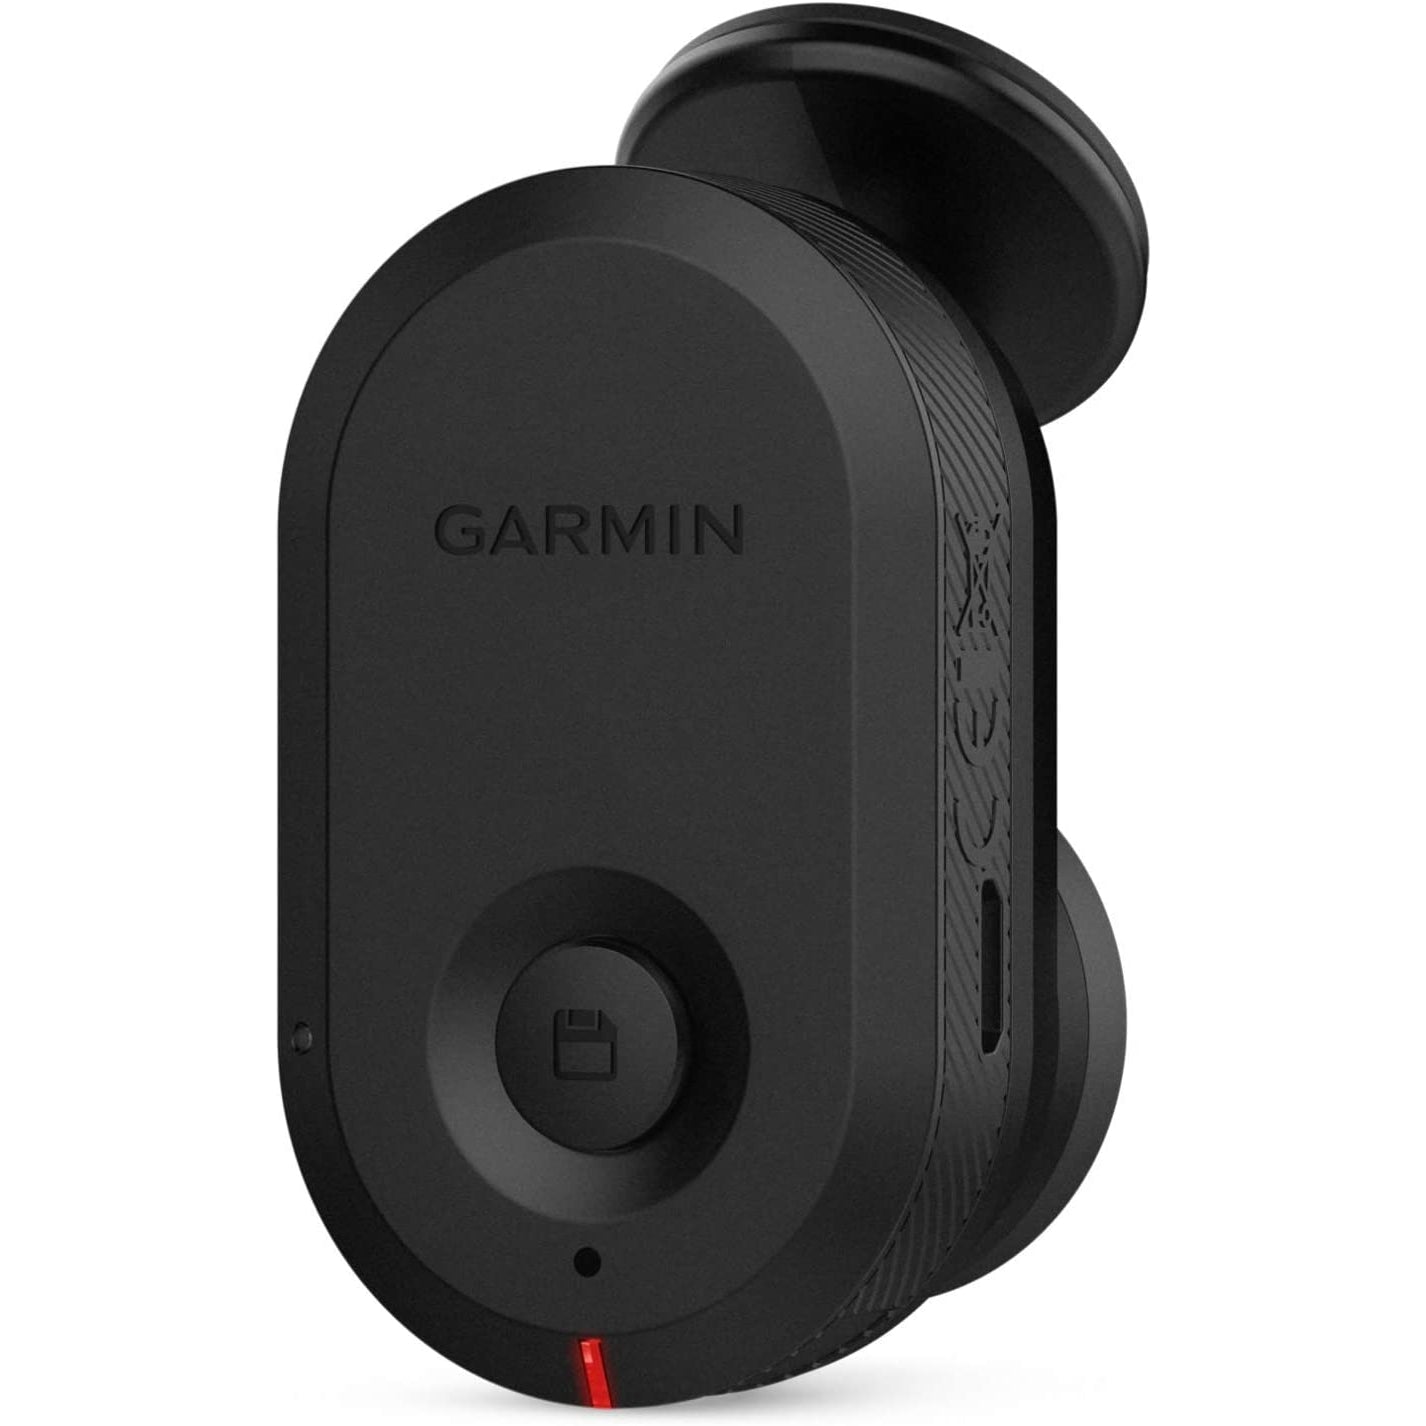 Garmin Dash Cam Mini - Black - Refurbished Pristine